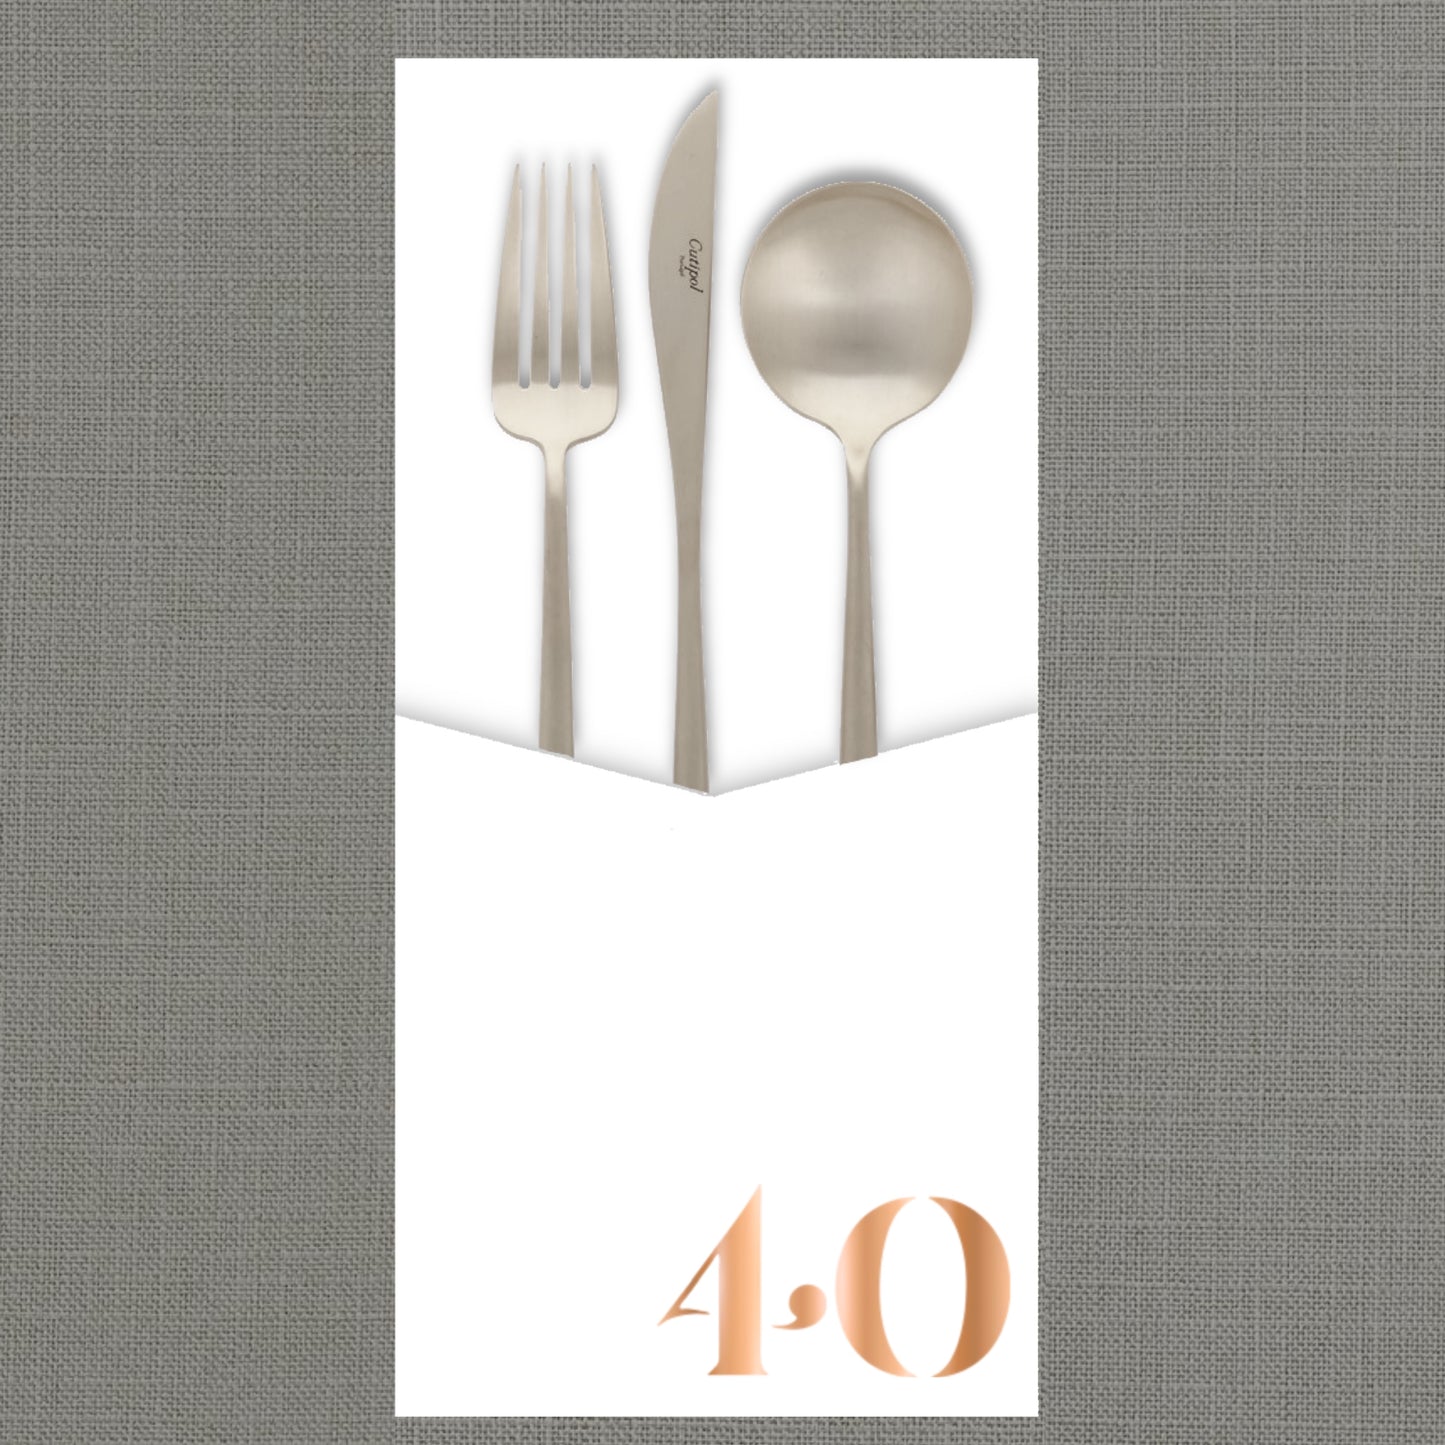 Foil Celebrate! 40 - Cutlery Pouch